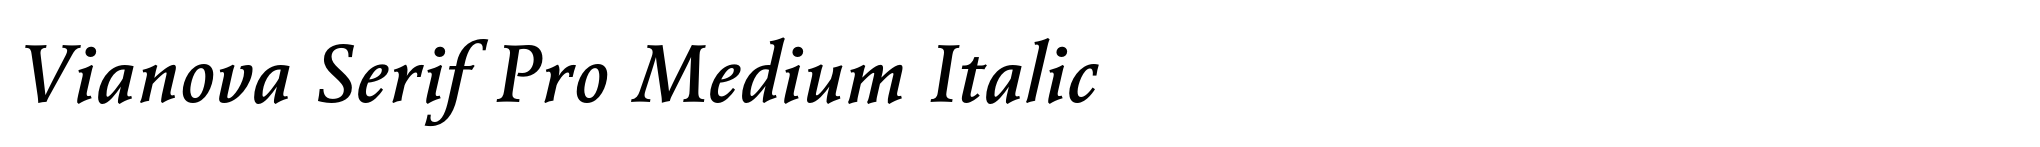 Vianova Serif Pro Medium Italic image